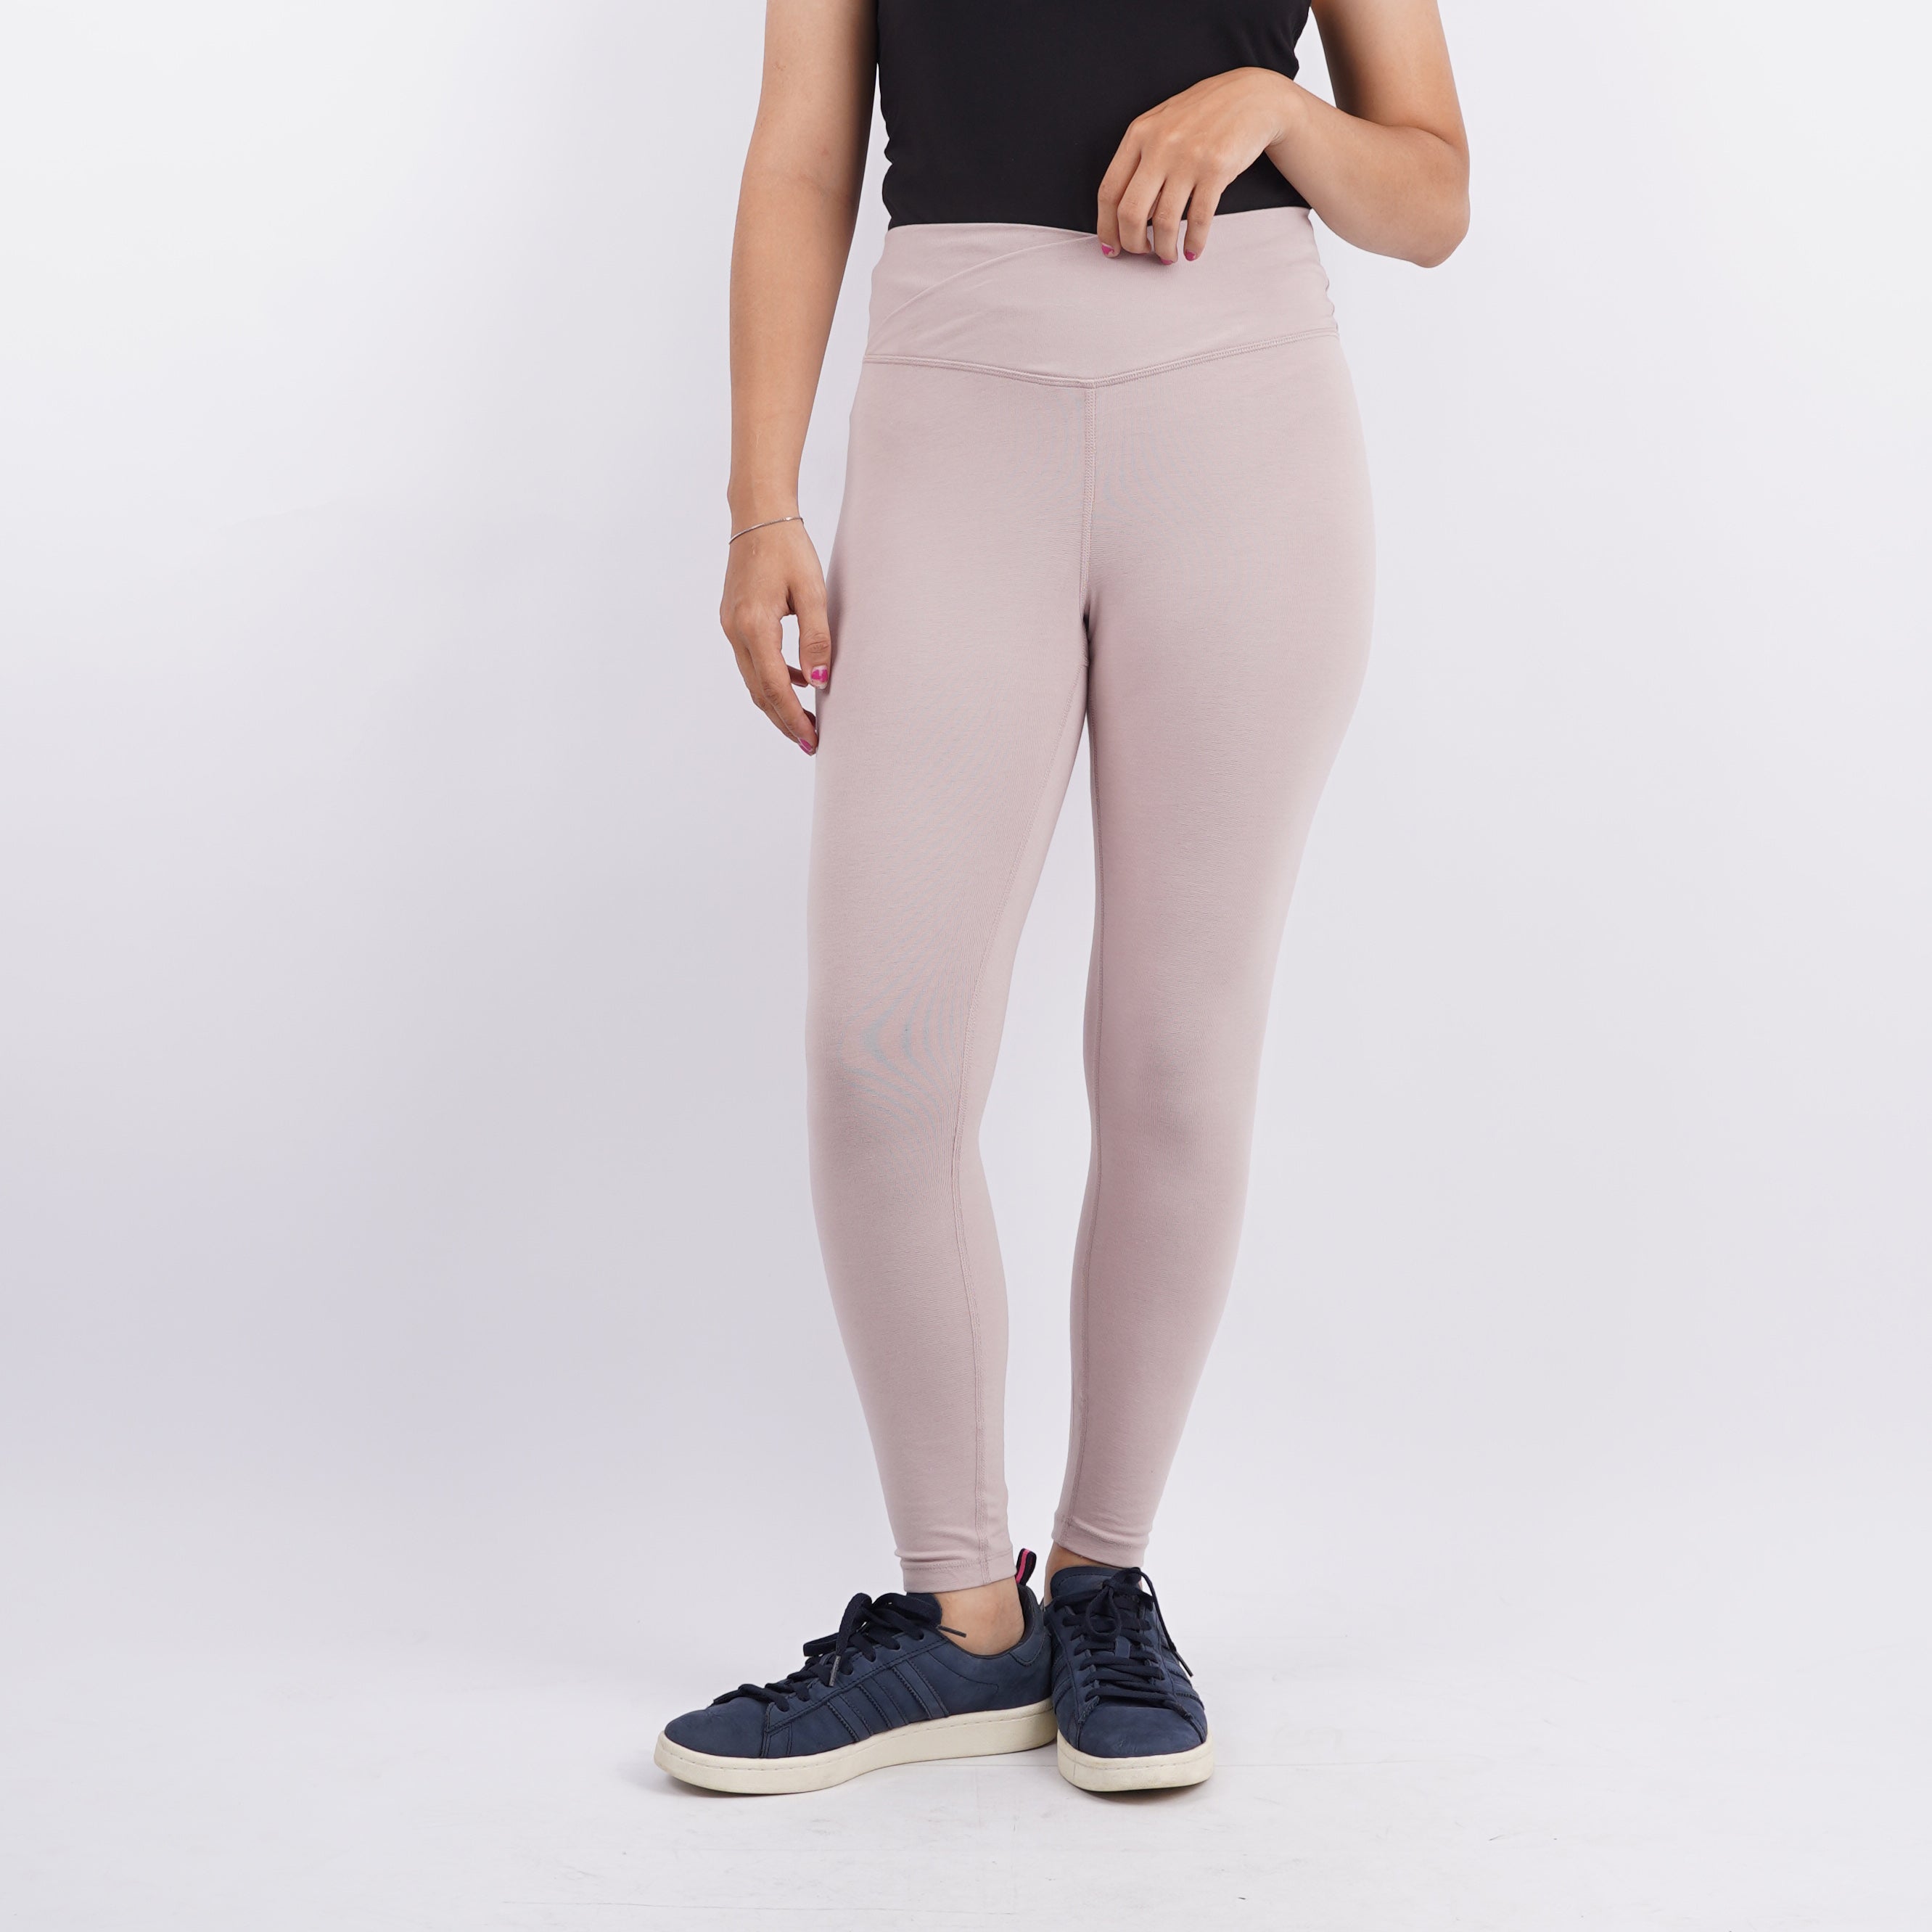 Legging Sport Wanita Celana Olahraga Untuk Gym/Yoga/Jogging [CG-OLL 02]